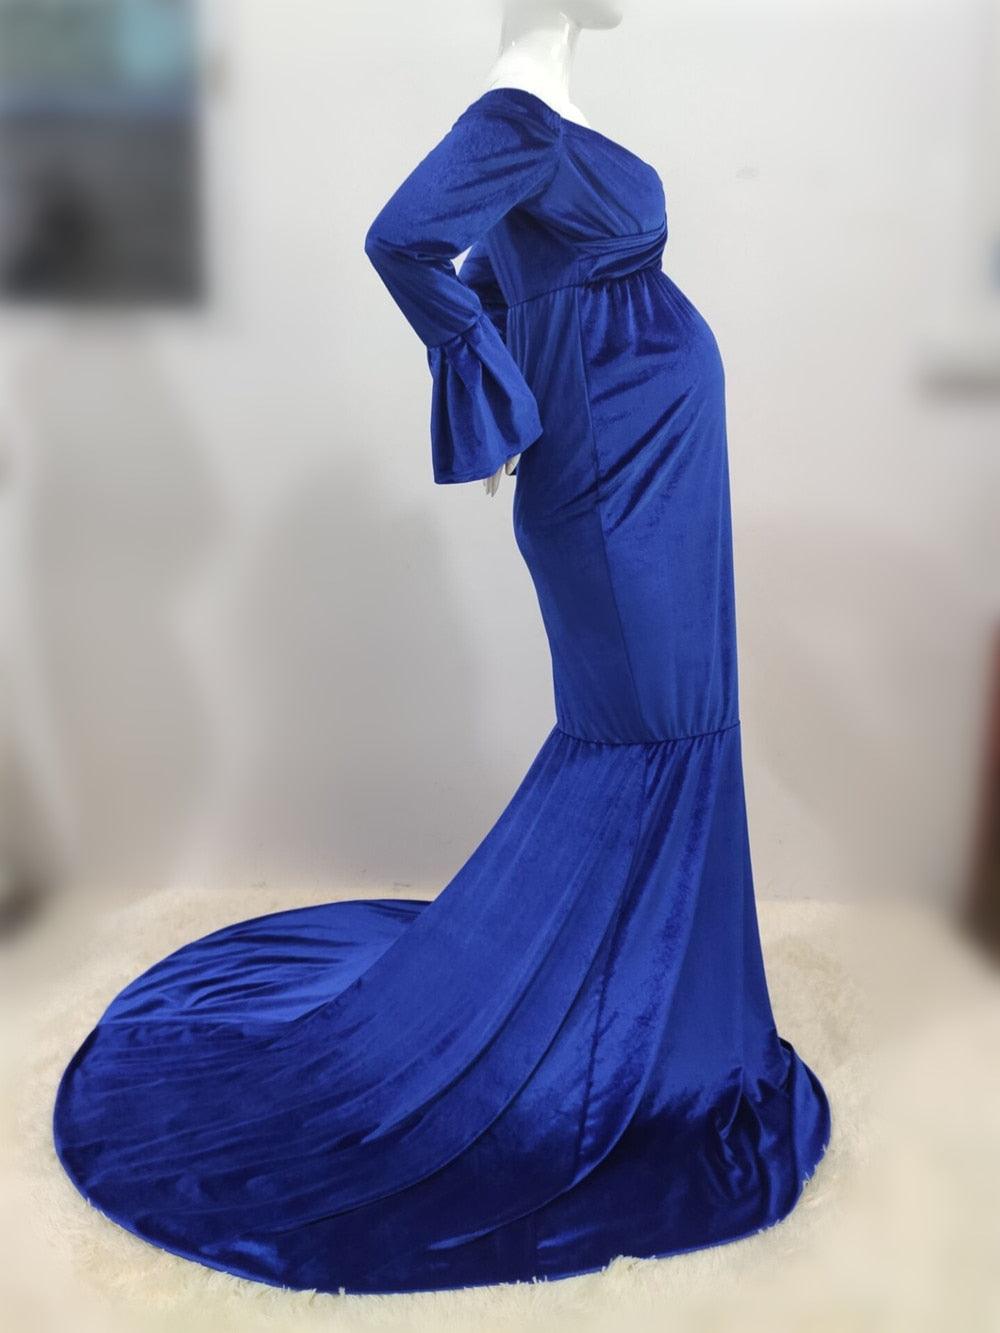 Trending Shoulderless Maternity Dresses For Photo Shoot -Sexy Long Pregnancy Dress - Maxi Gown Photography(1U5)(Z6)(Z8)(1Z1)(2Z1)(3Z1)(4Z1)(7Z1)